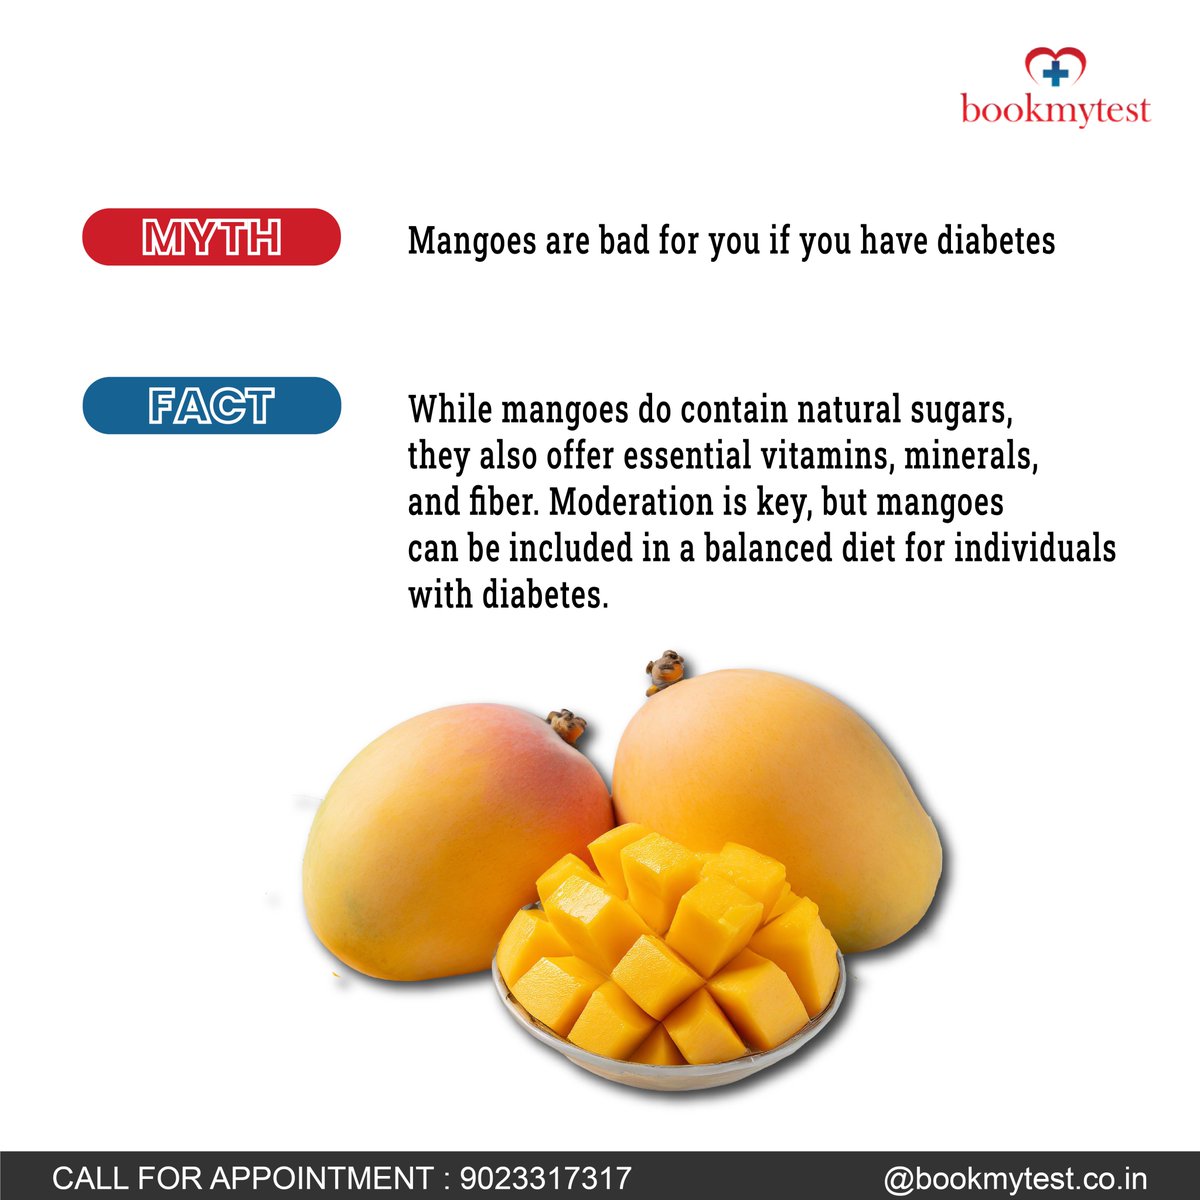 #mangoes #diabetes #balanceddiet #nutrition #fiber #moderation #healthyeating #vitamins #minerals #mythbusting #bookmytest